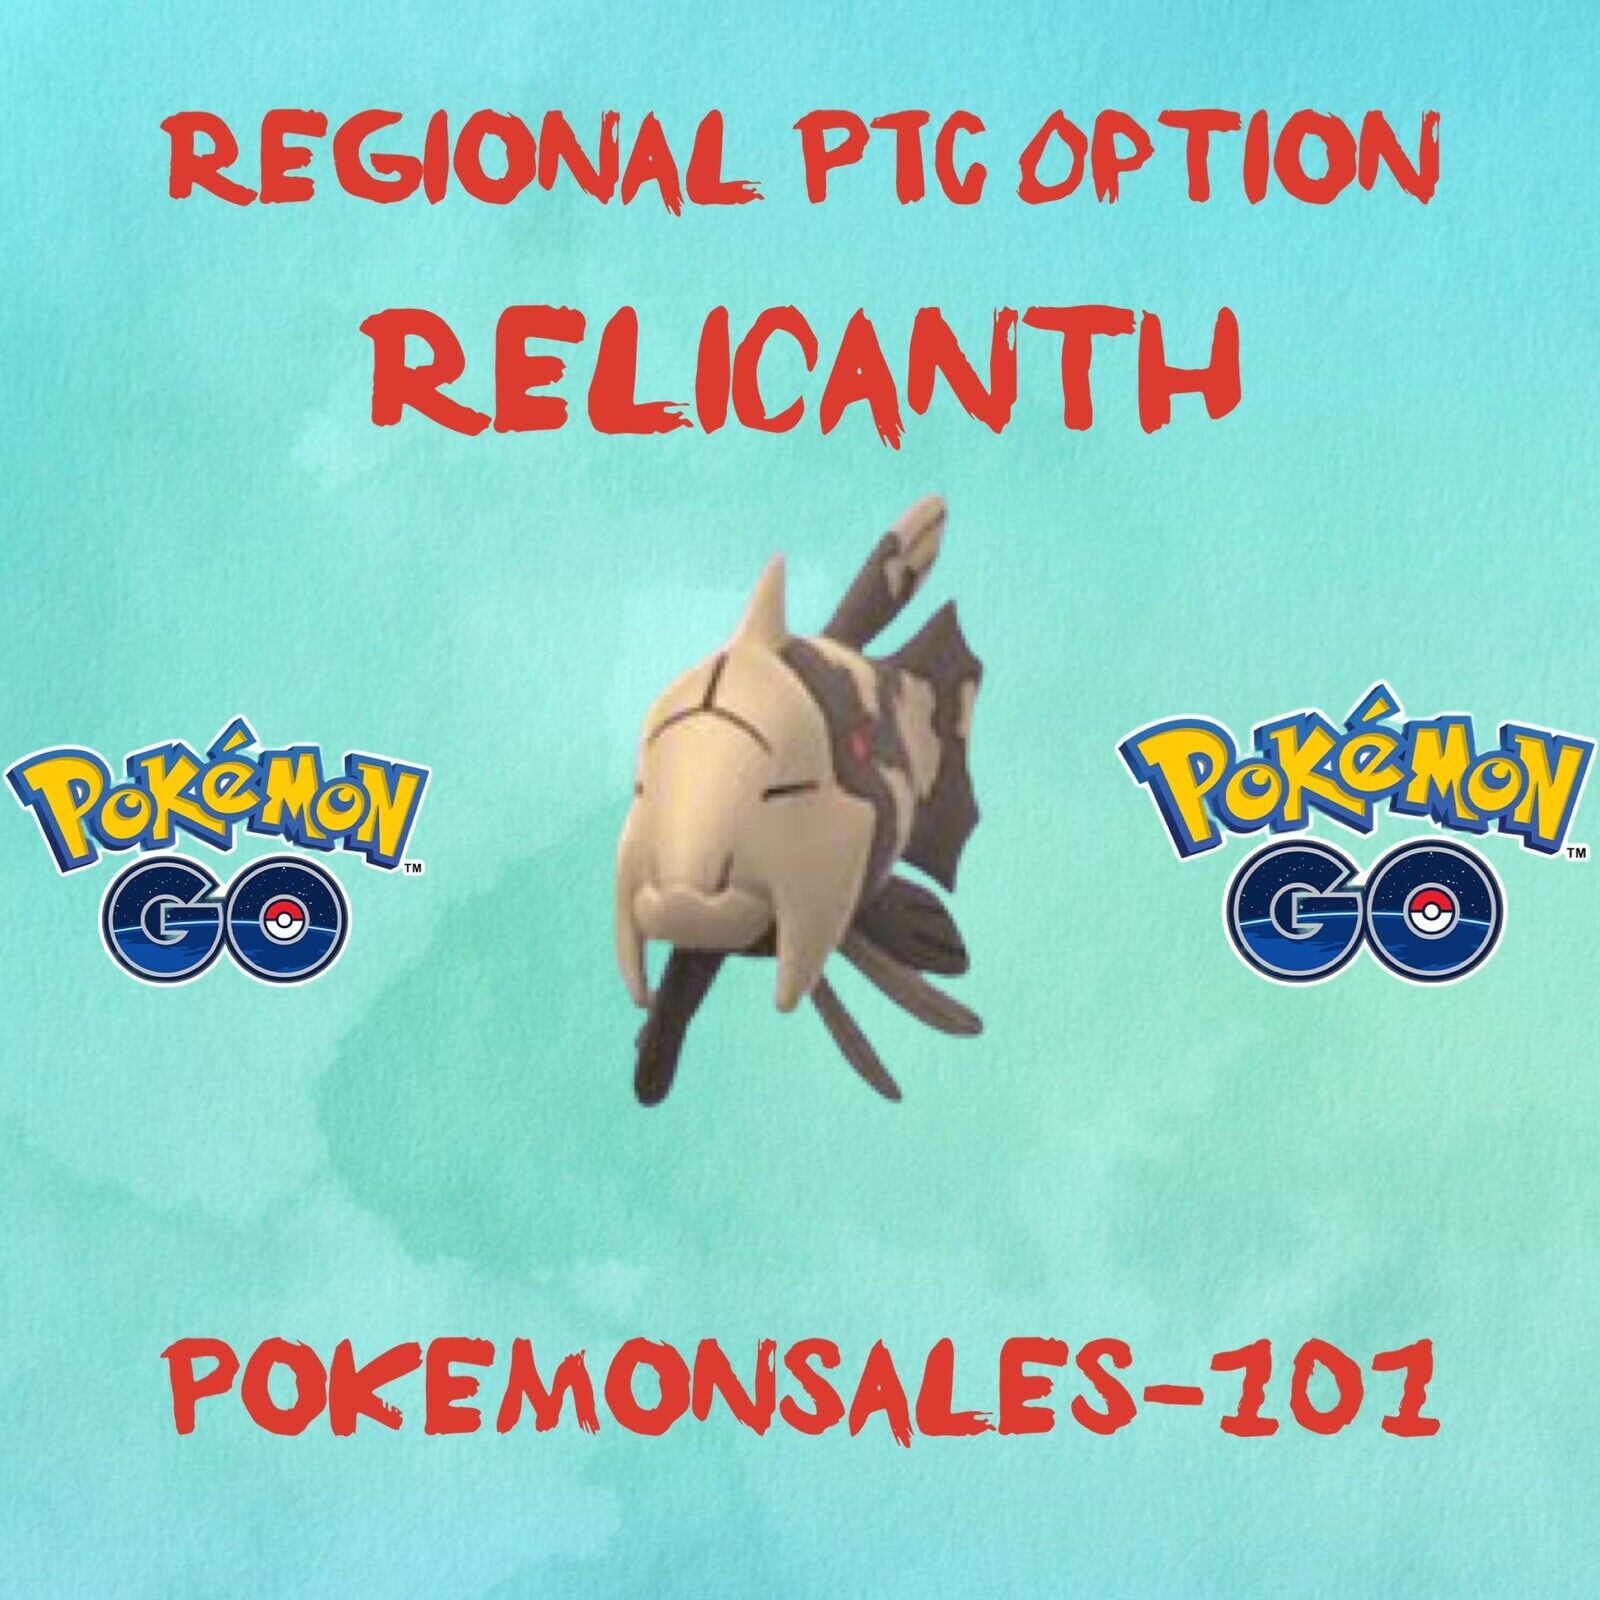 Pokemon Go - Relicanth Catch - PTC Options - REGIONAL